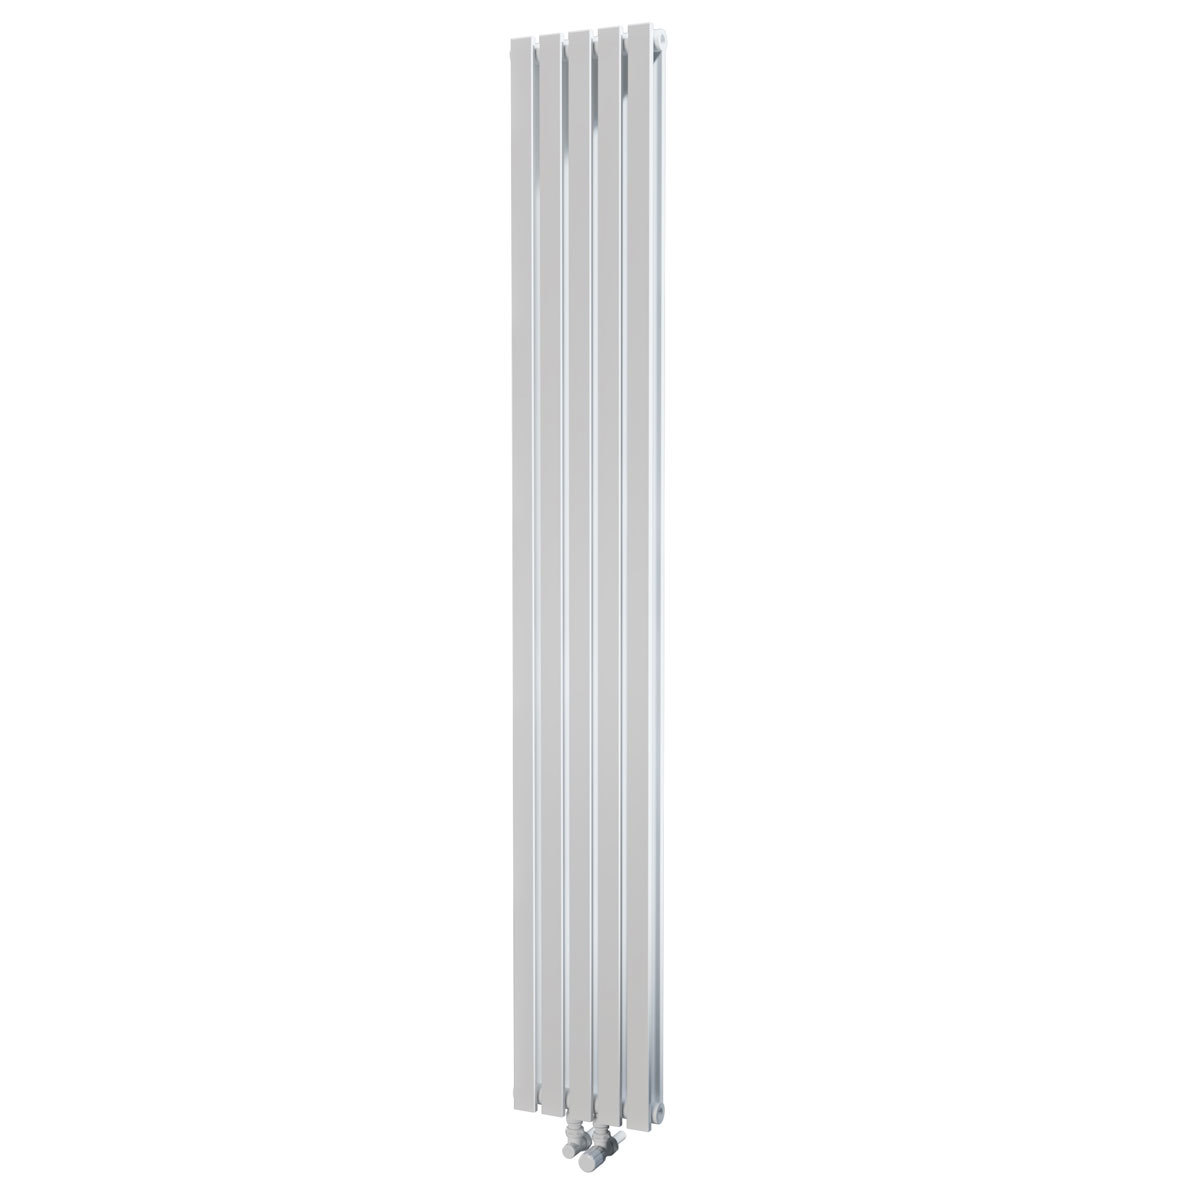 Linear radiator on white background